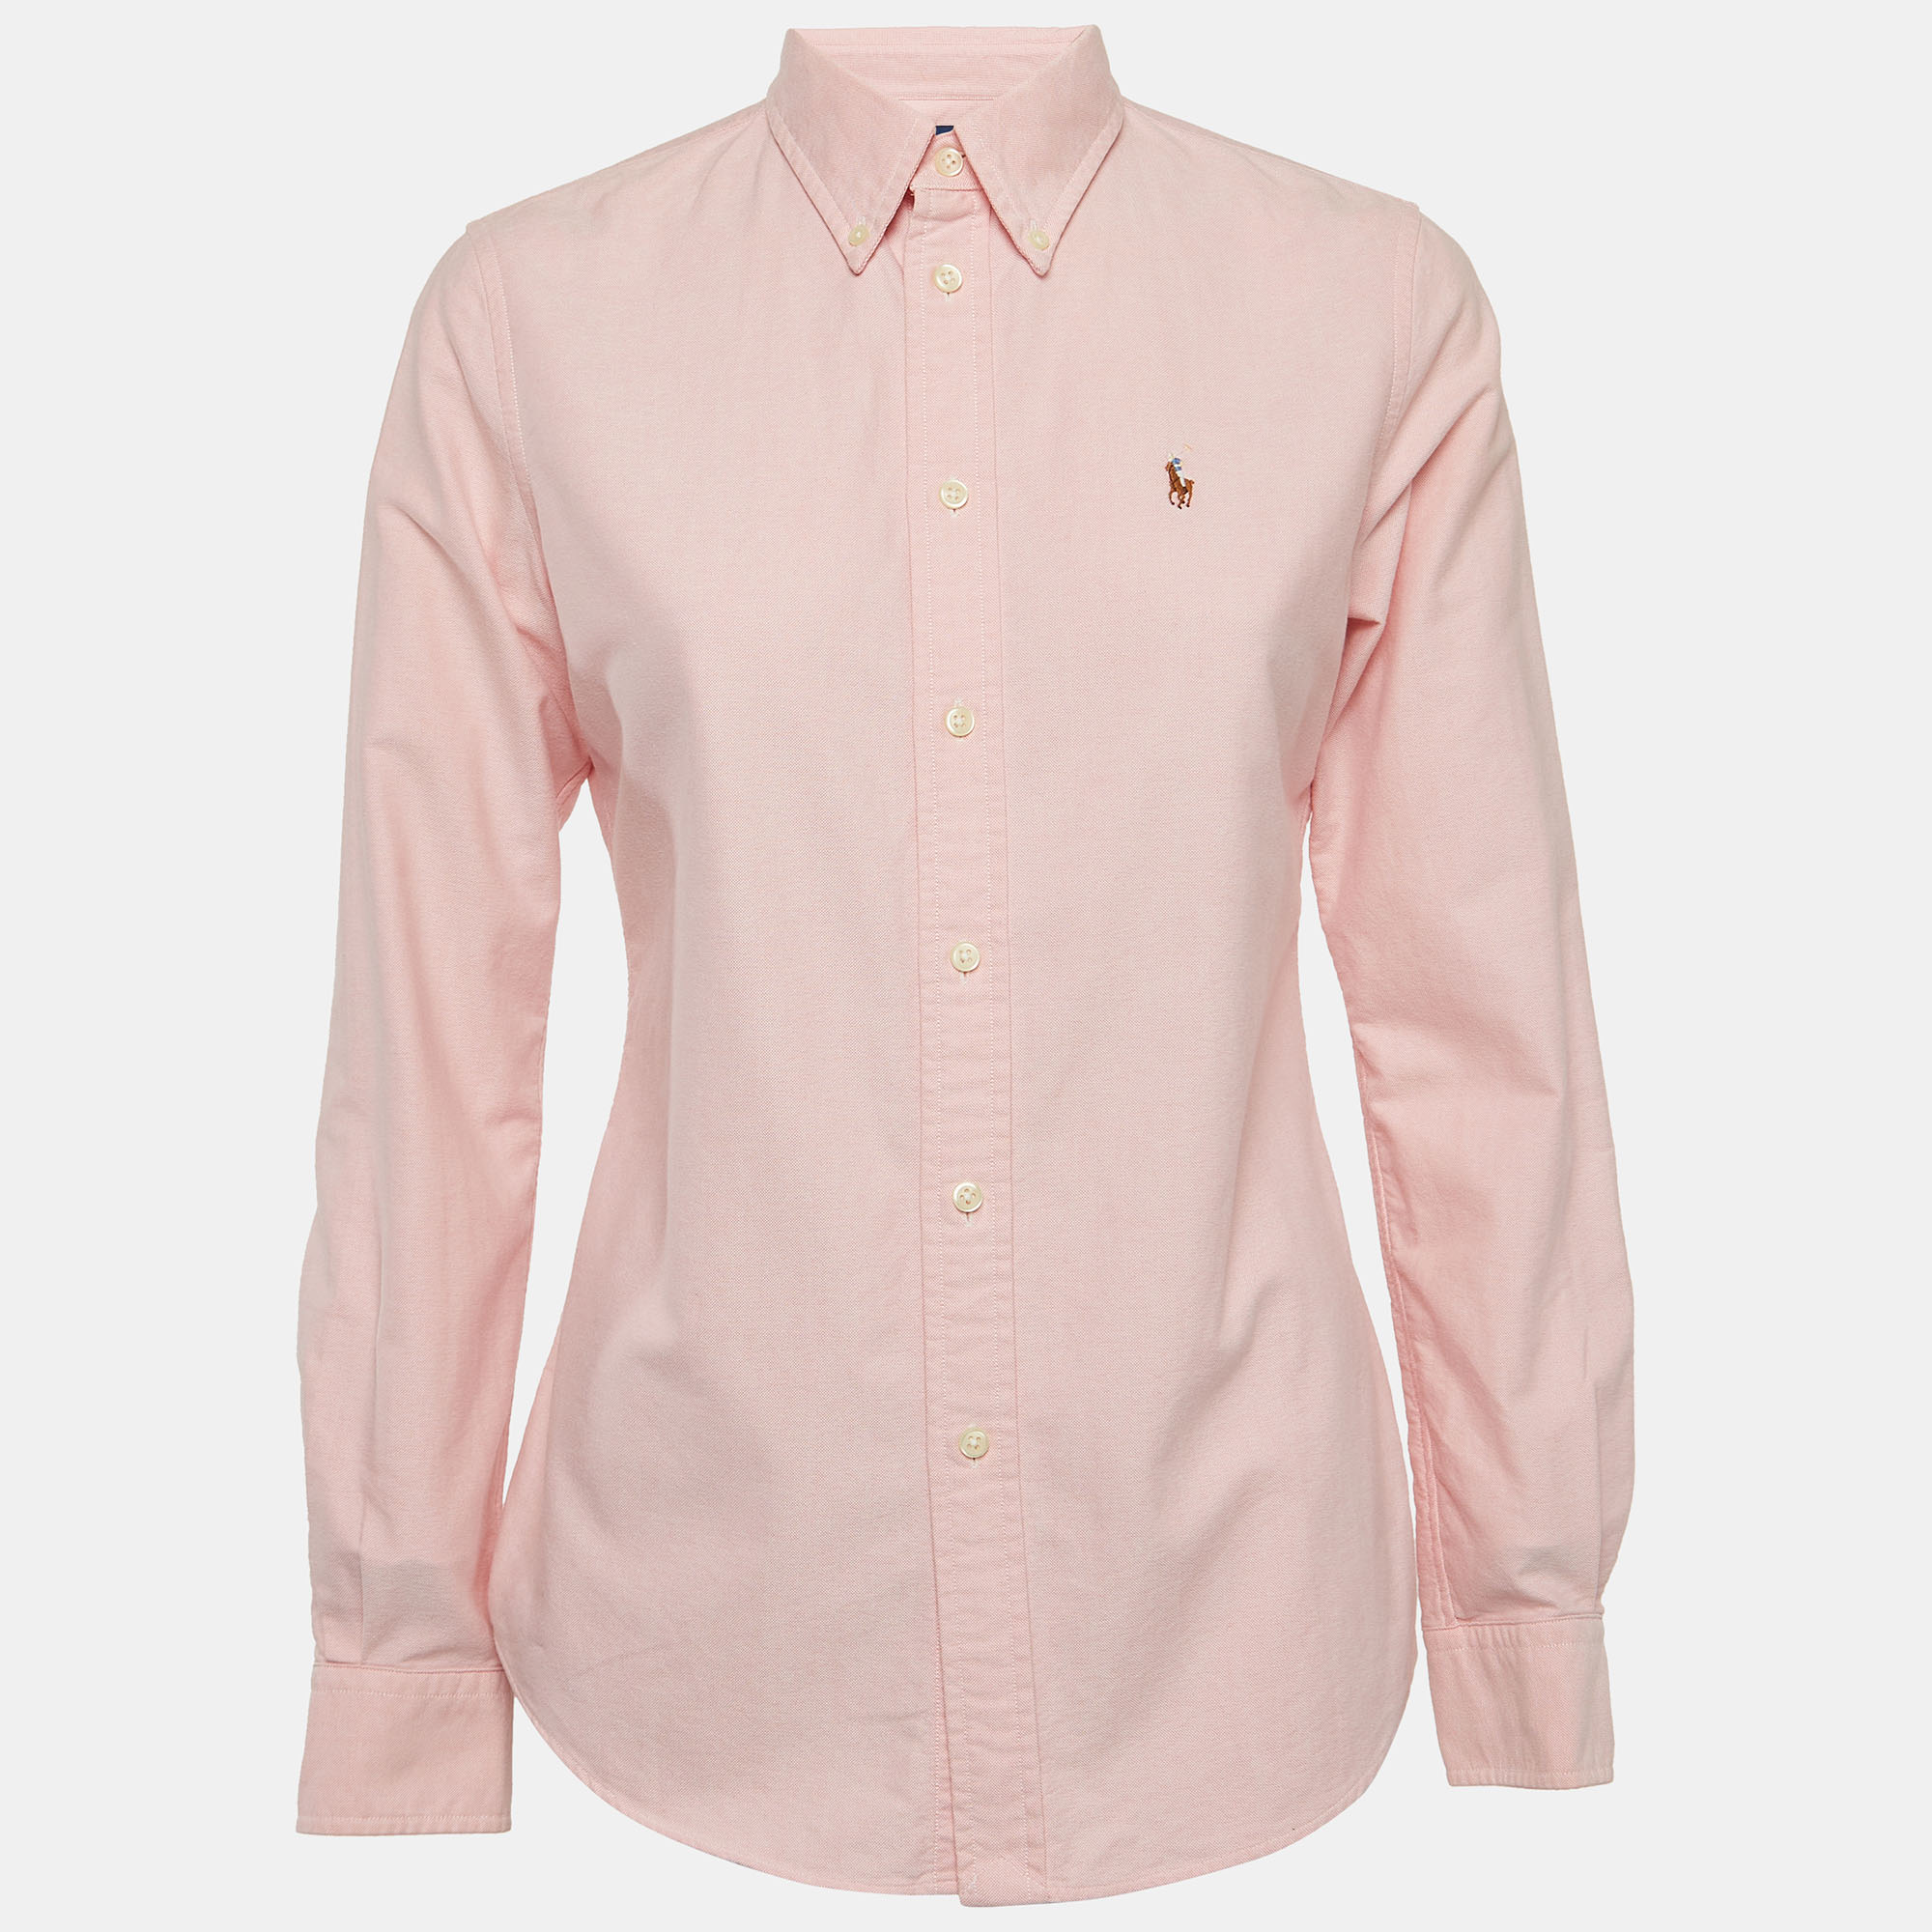 Ralph lauren pink logo embroidered cotton button down shirt s